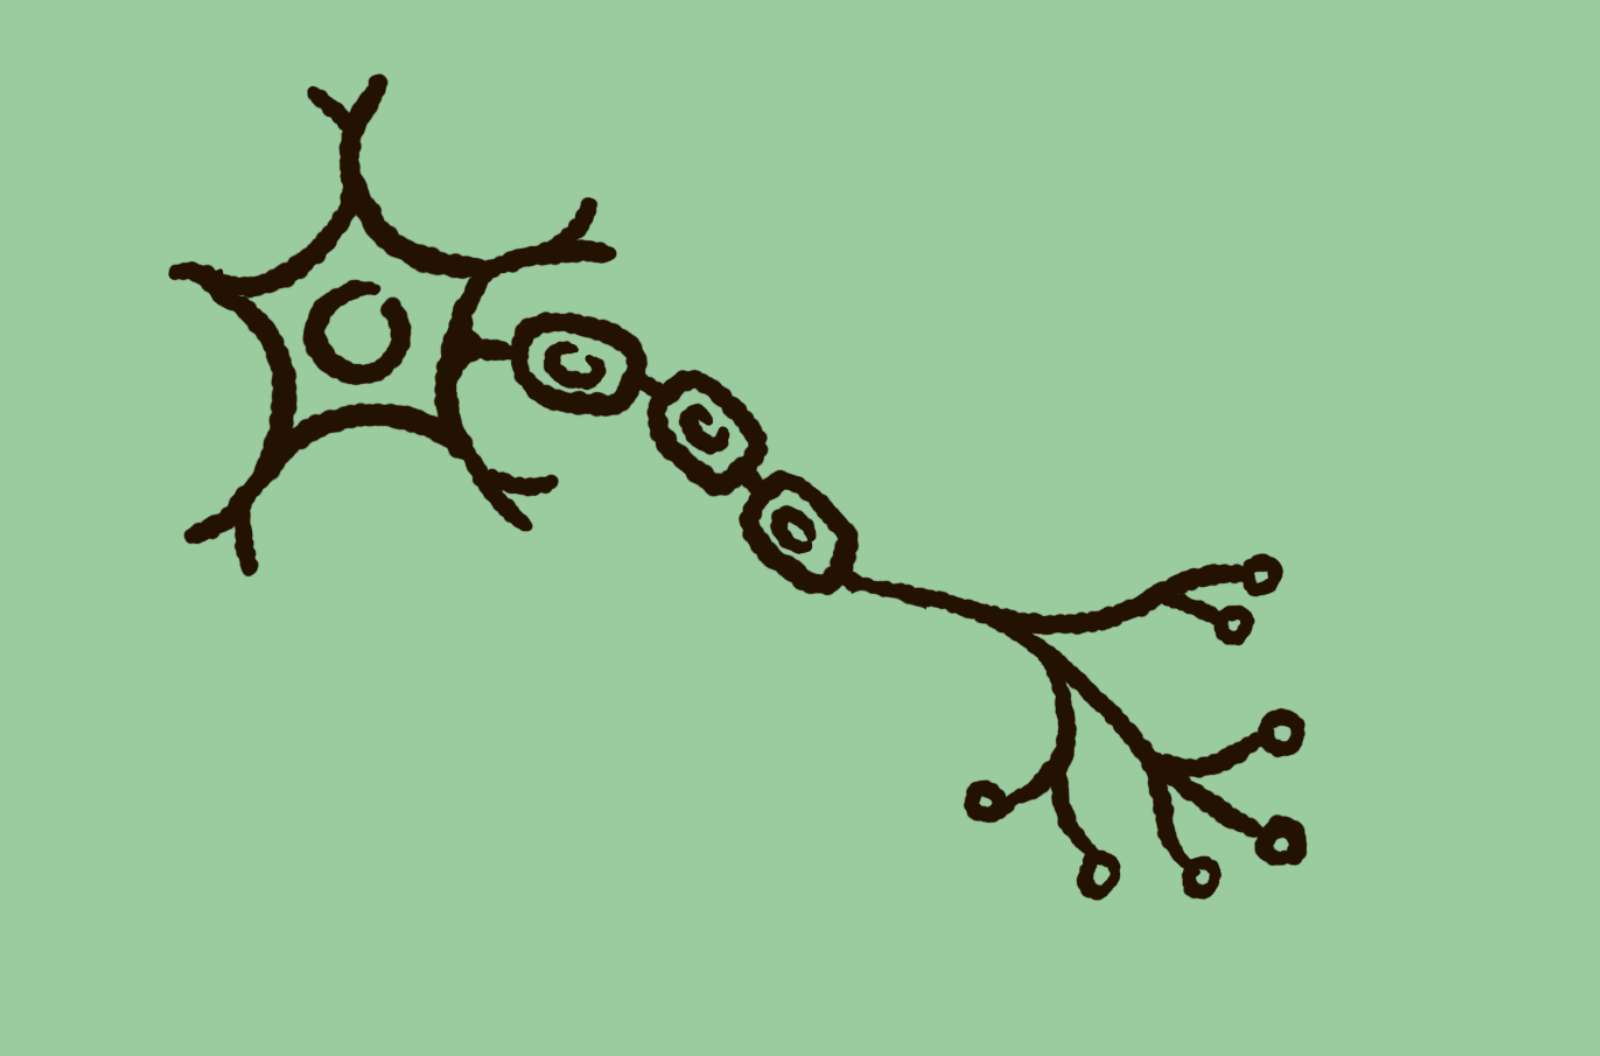 A line art neuron